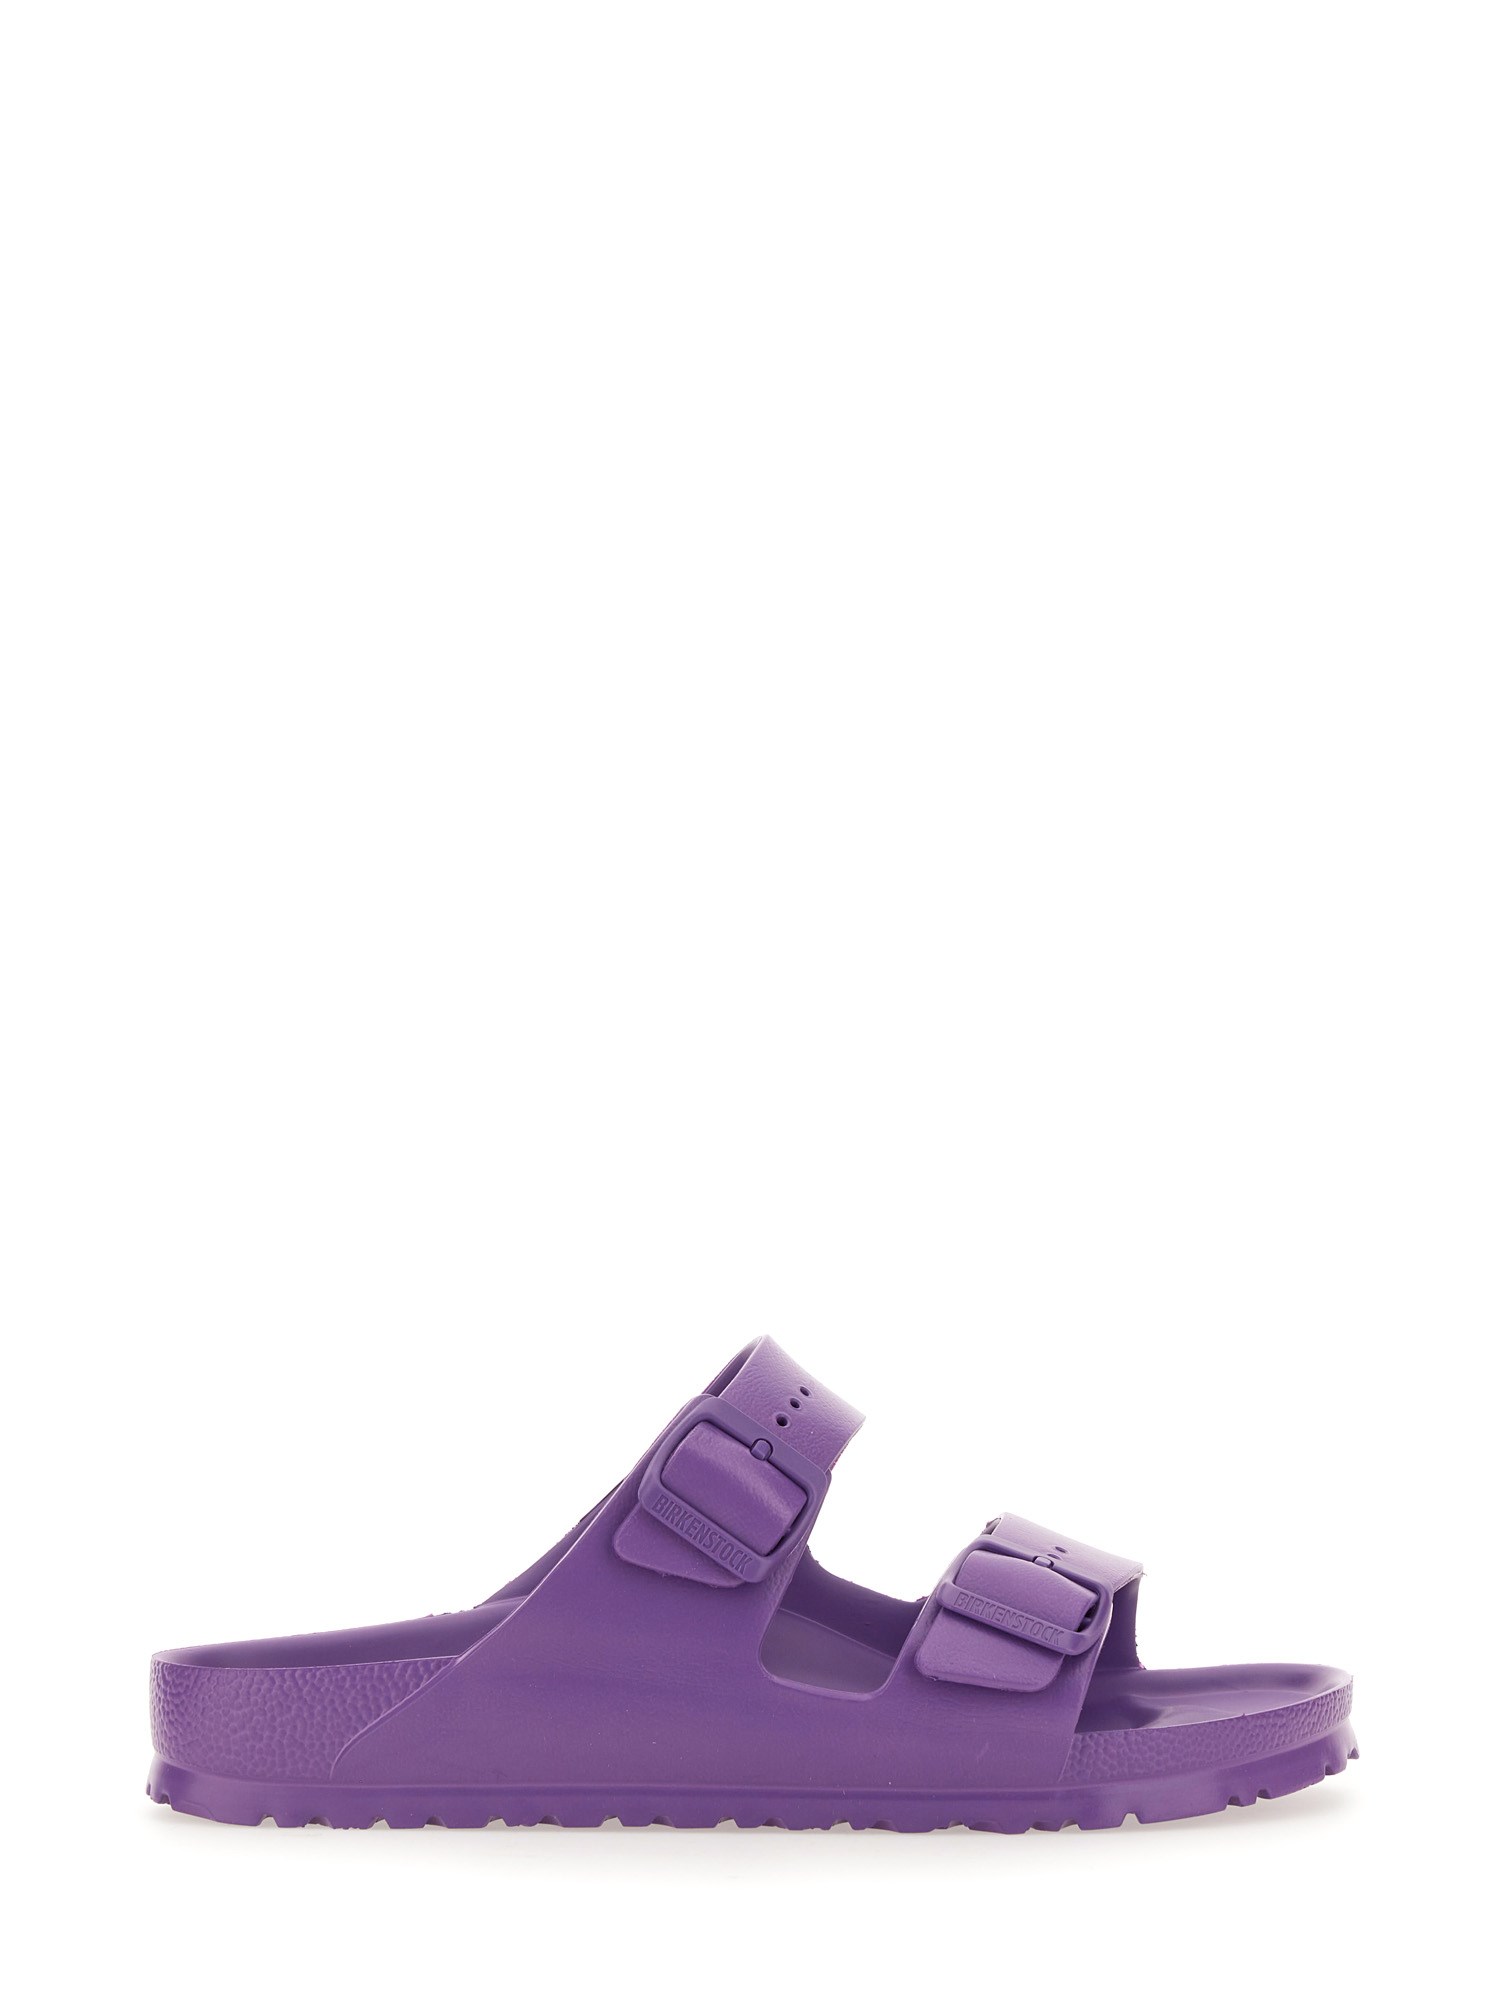 Birkenstock Arizona Essentials Sandal In Purple